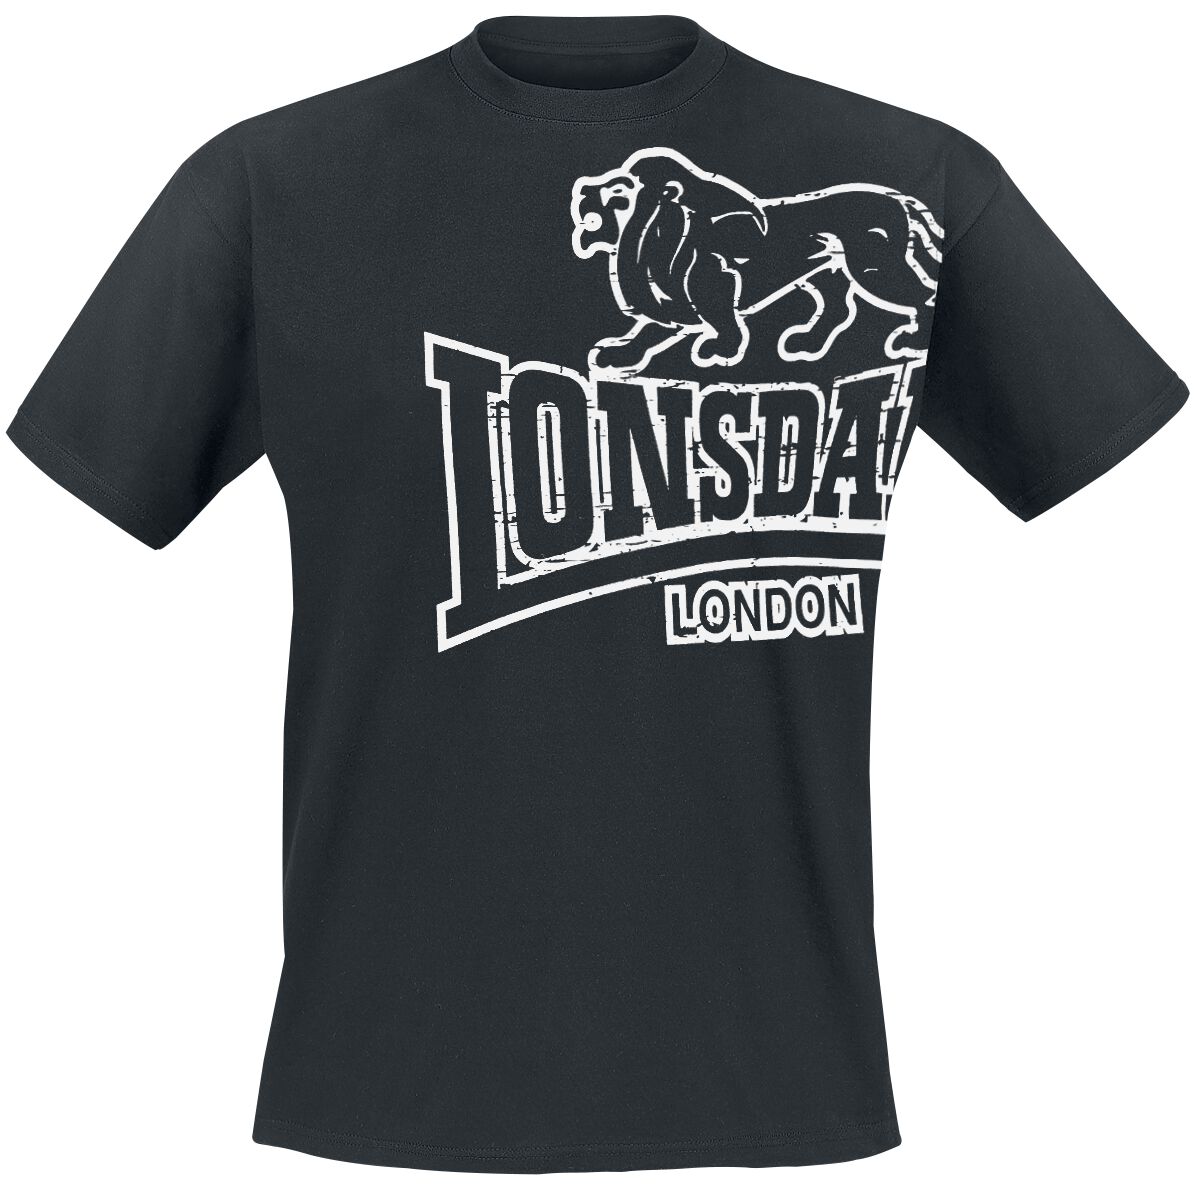 Image of Lonsdale London Langsett T-Shirt schwarz